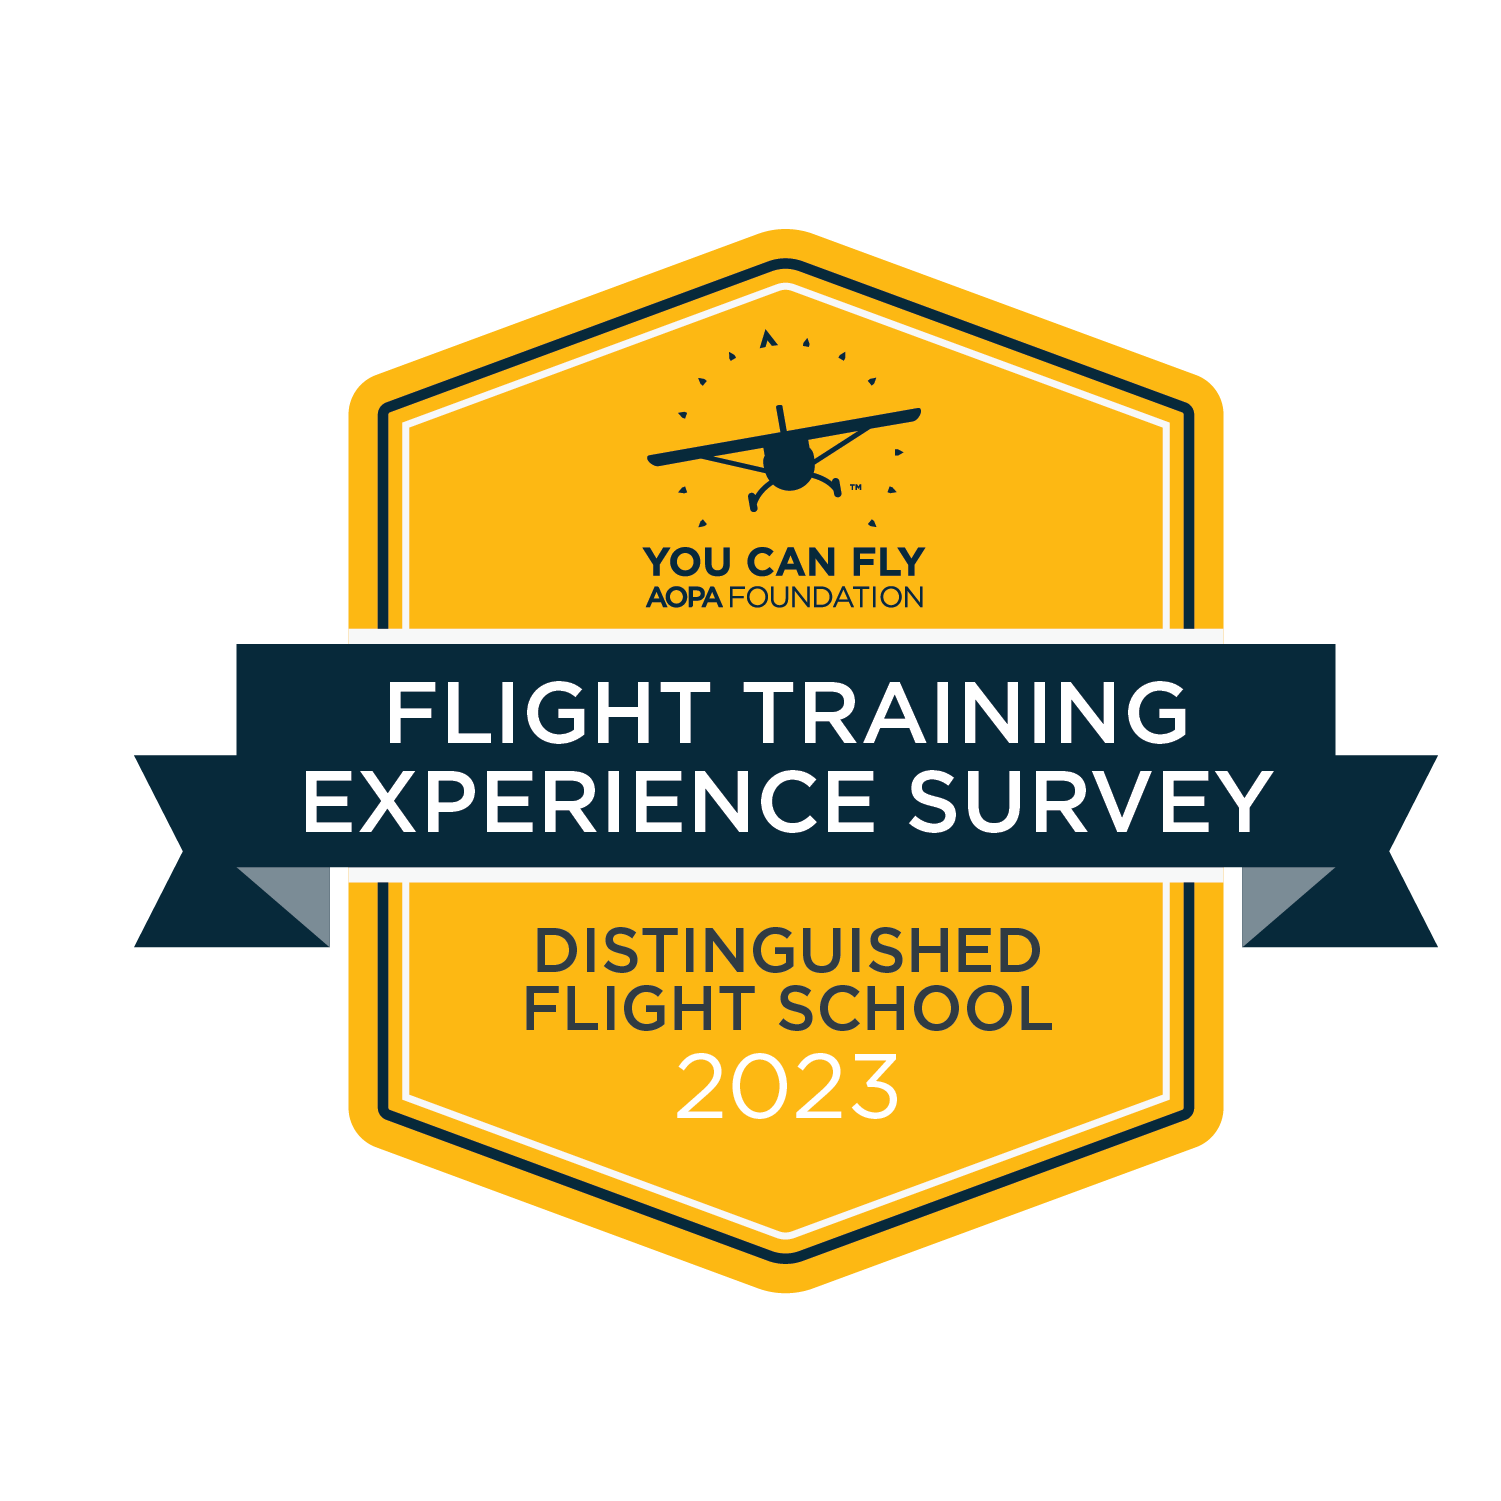 AOPA Awarded Code 1 Flight Training "Distinguished Flight School " for 2023